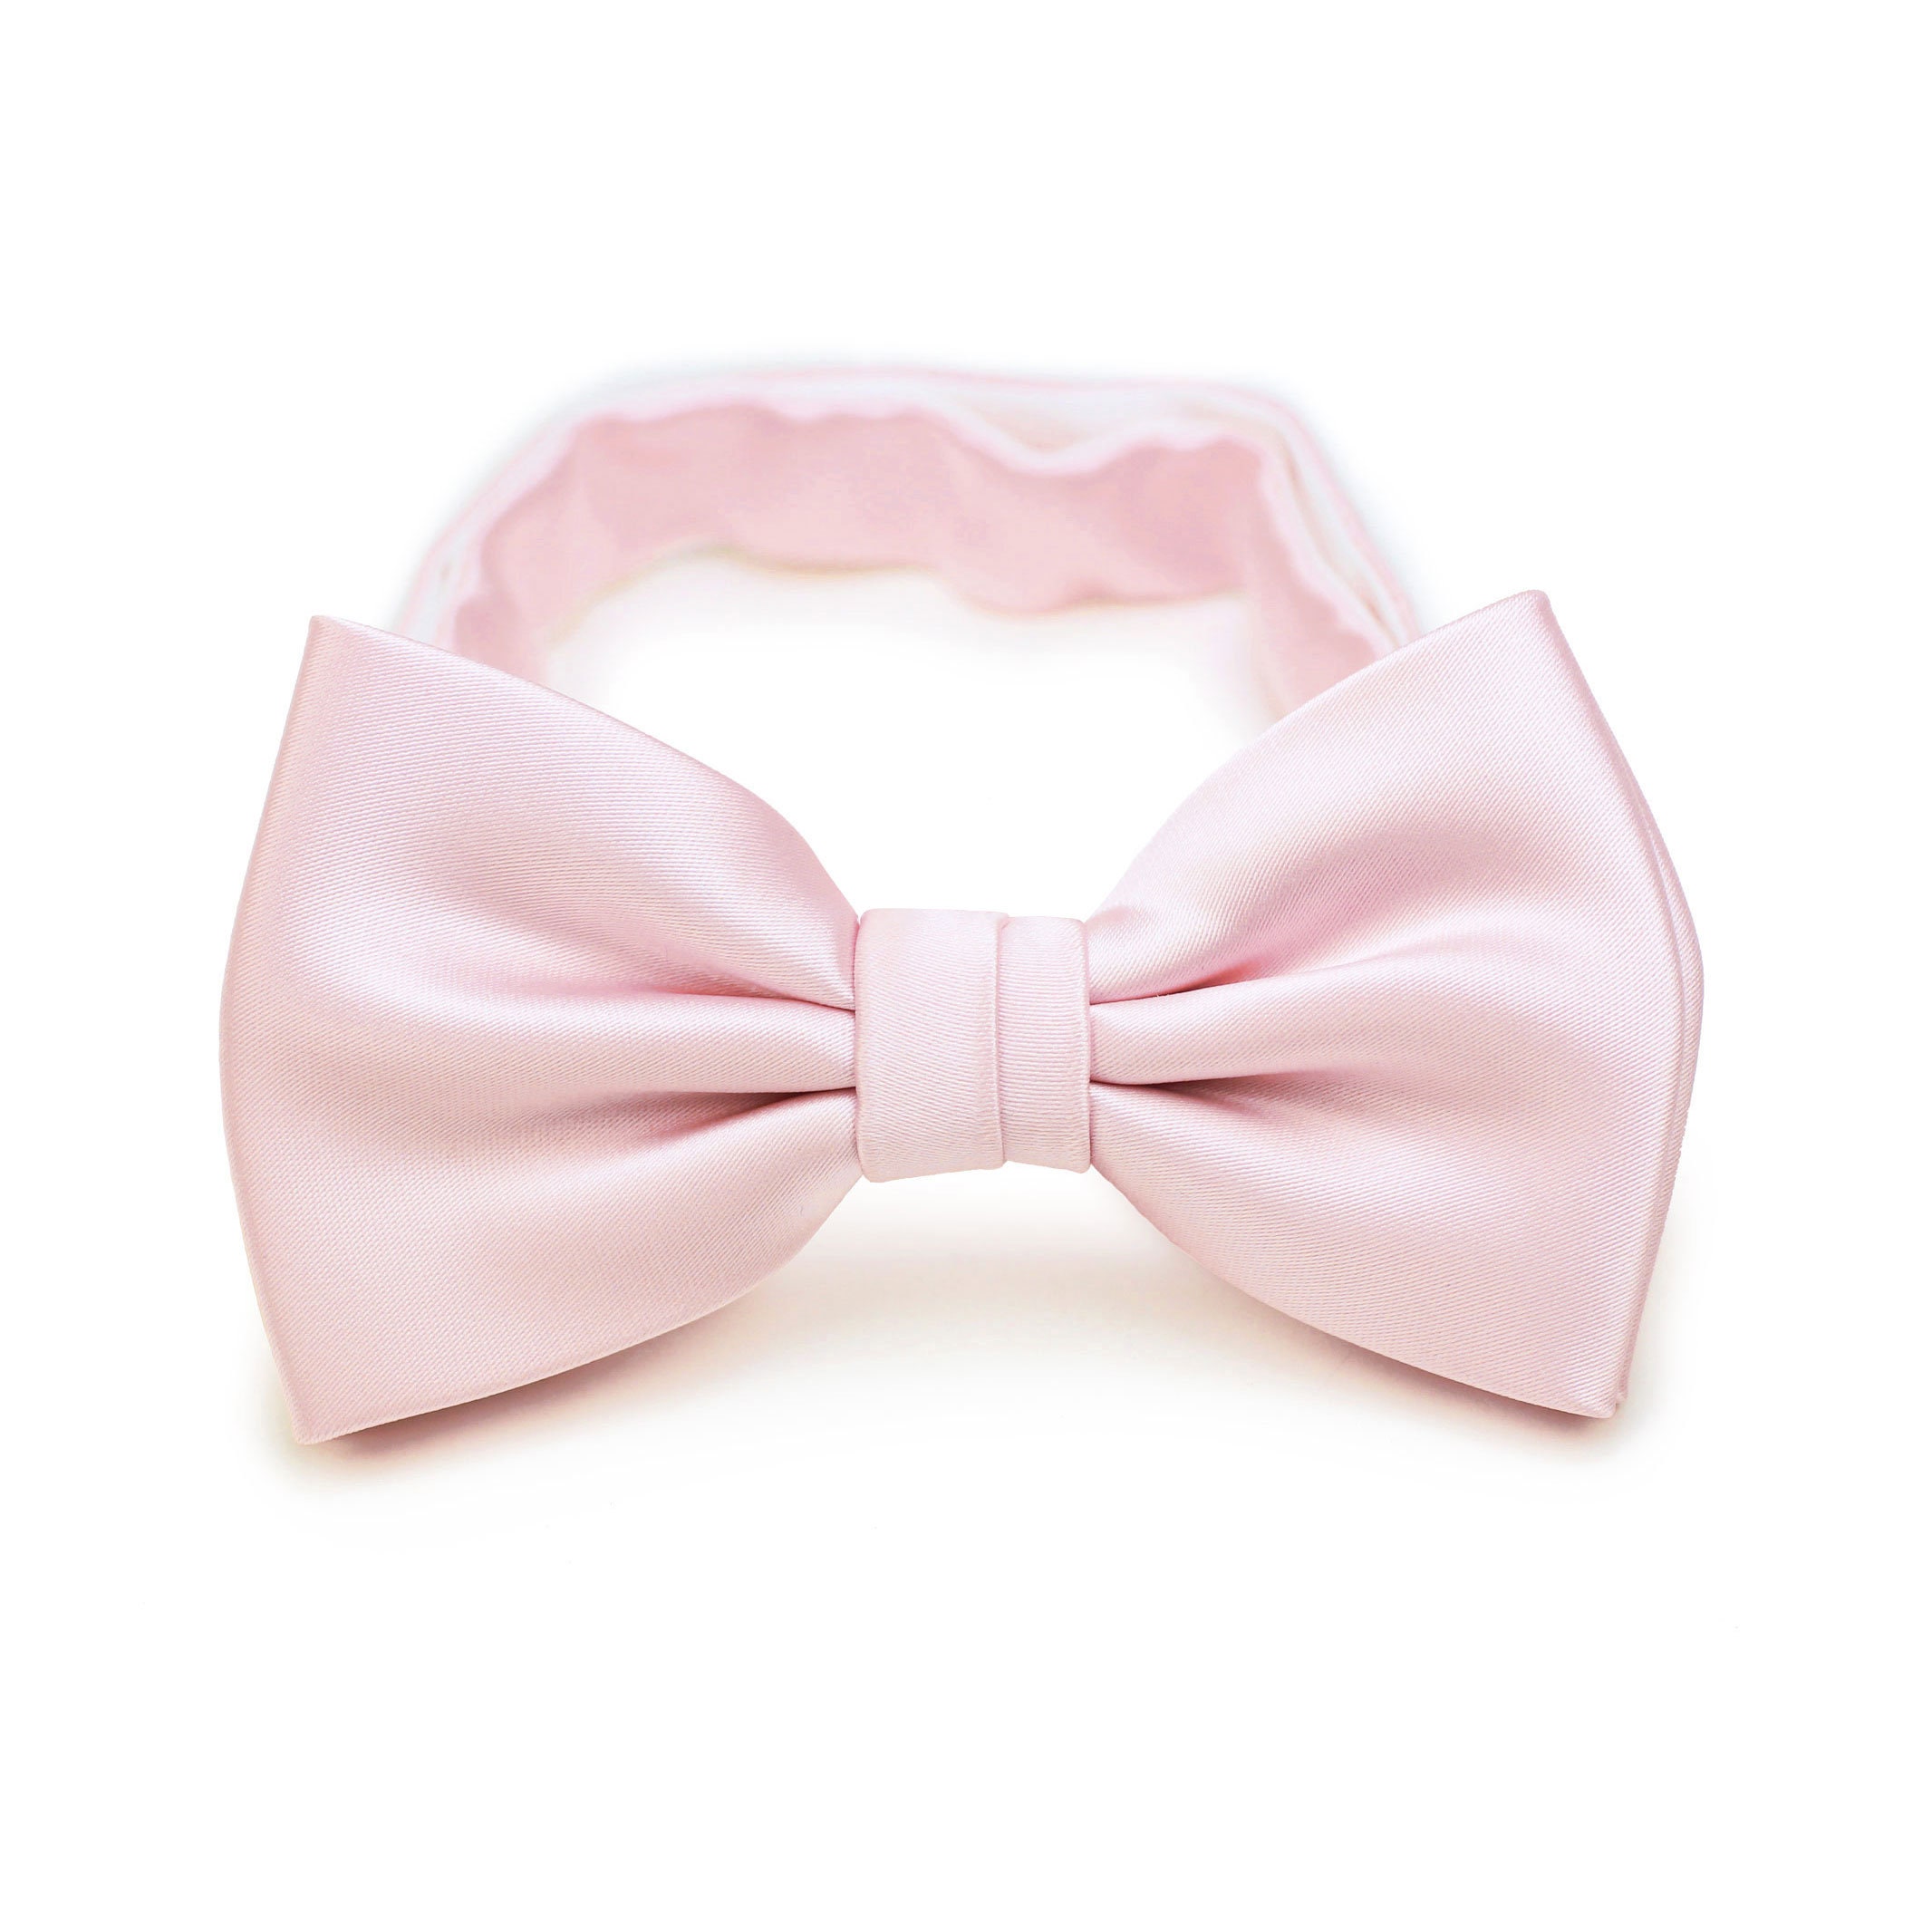 Blush Bow Tie Wedding Bow Tie in Blush Pink Satin Finish - Etsy